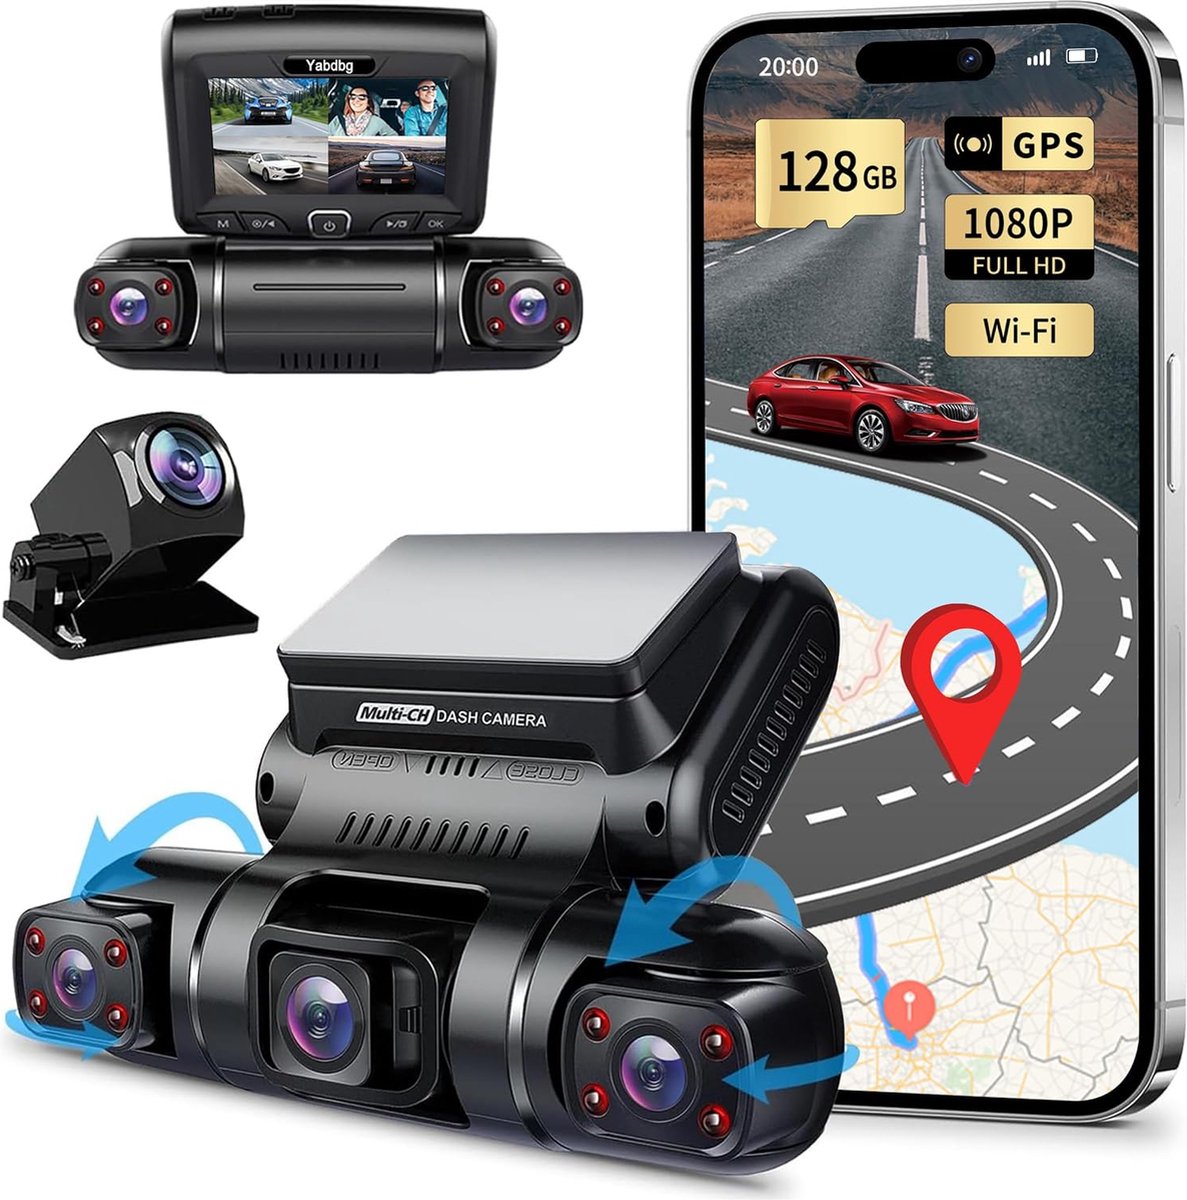 Autocamera met Parkeermodus en Nachtzicht - Groothoeklens - Full HD Opname - Compact Design